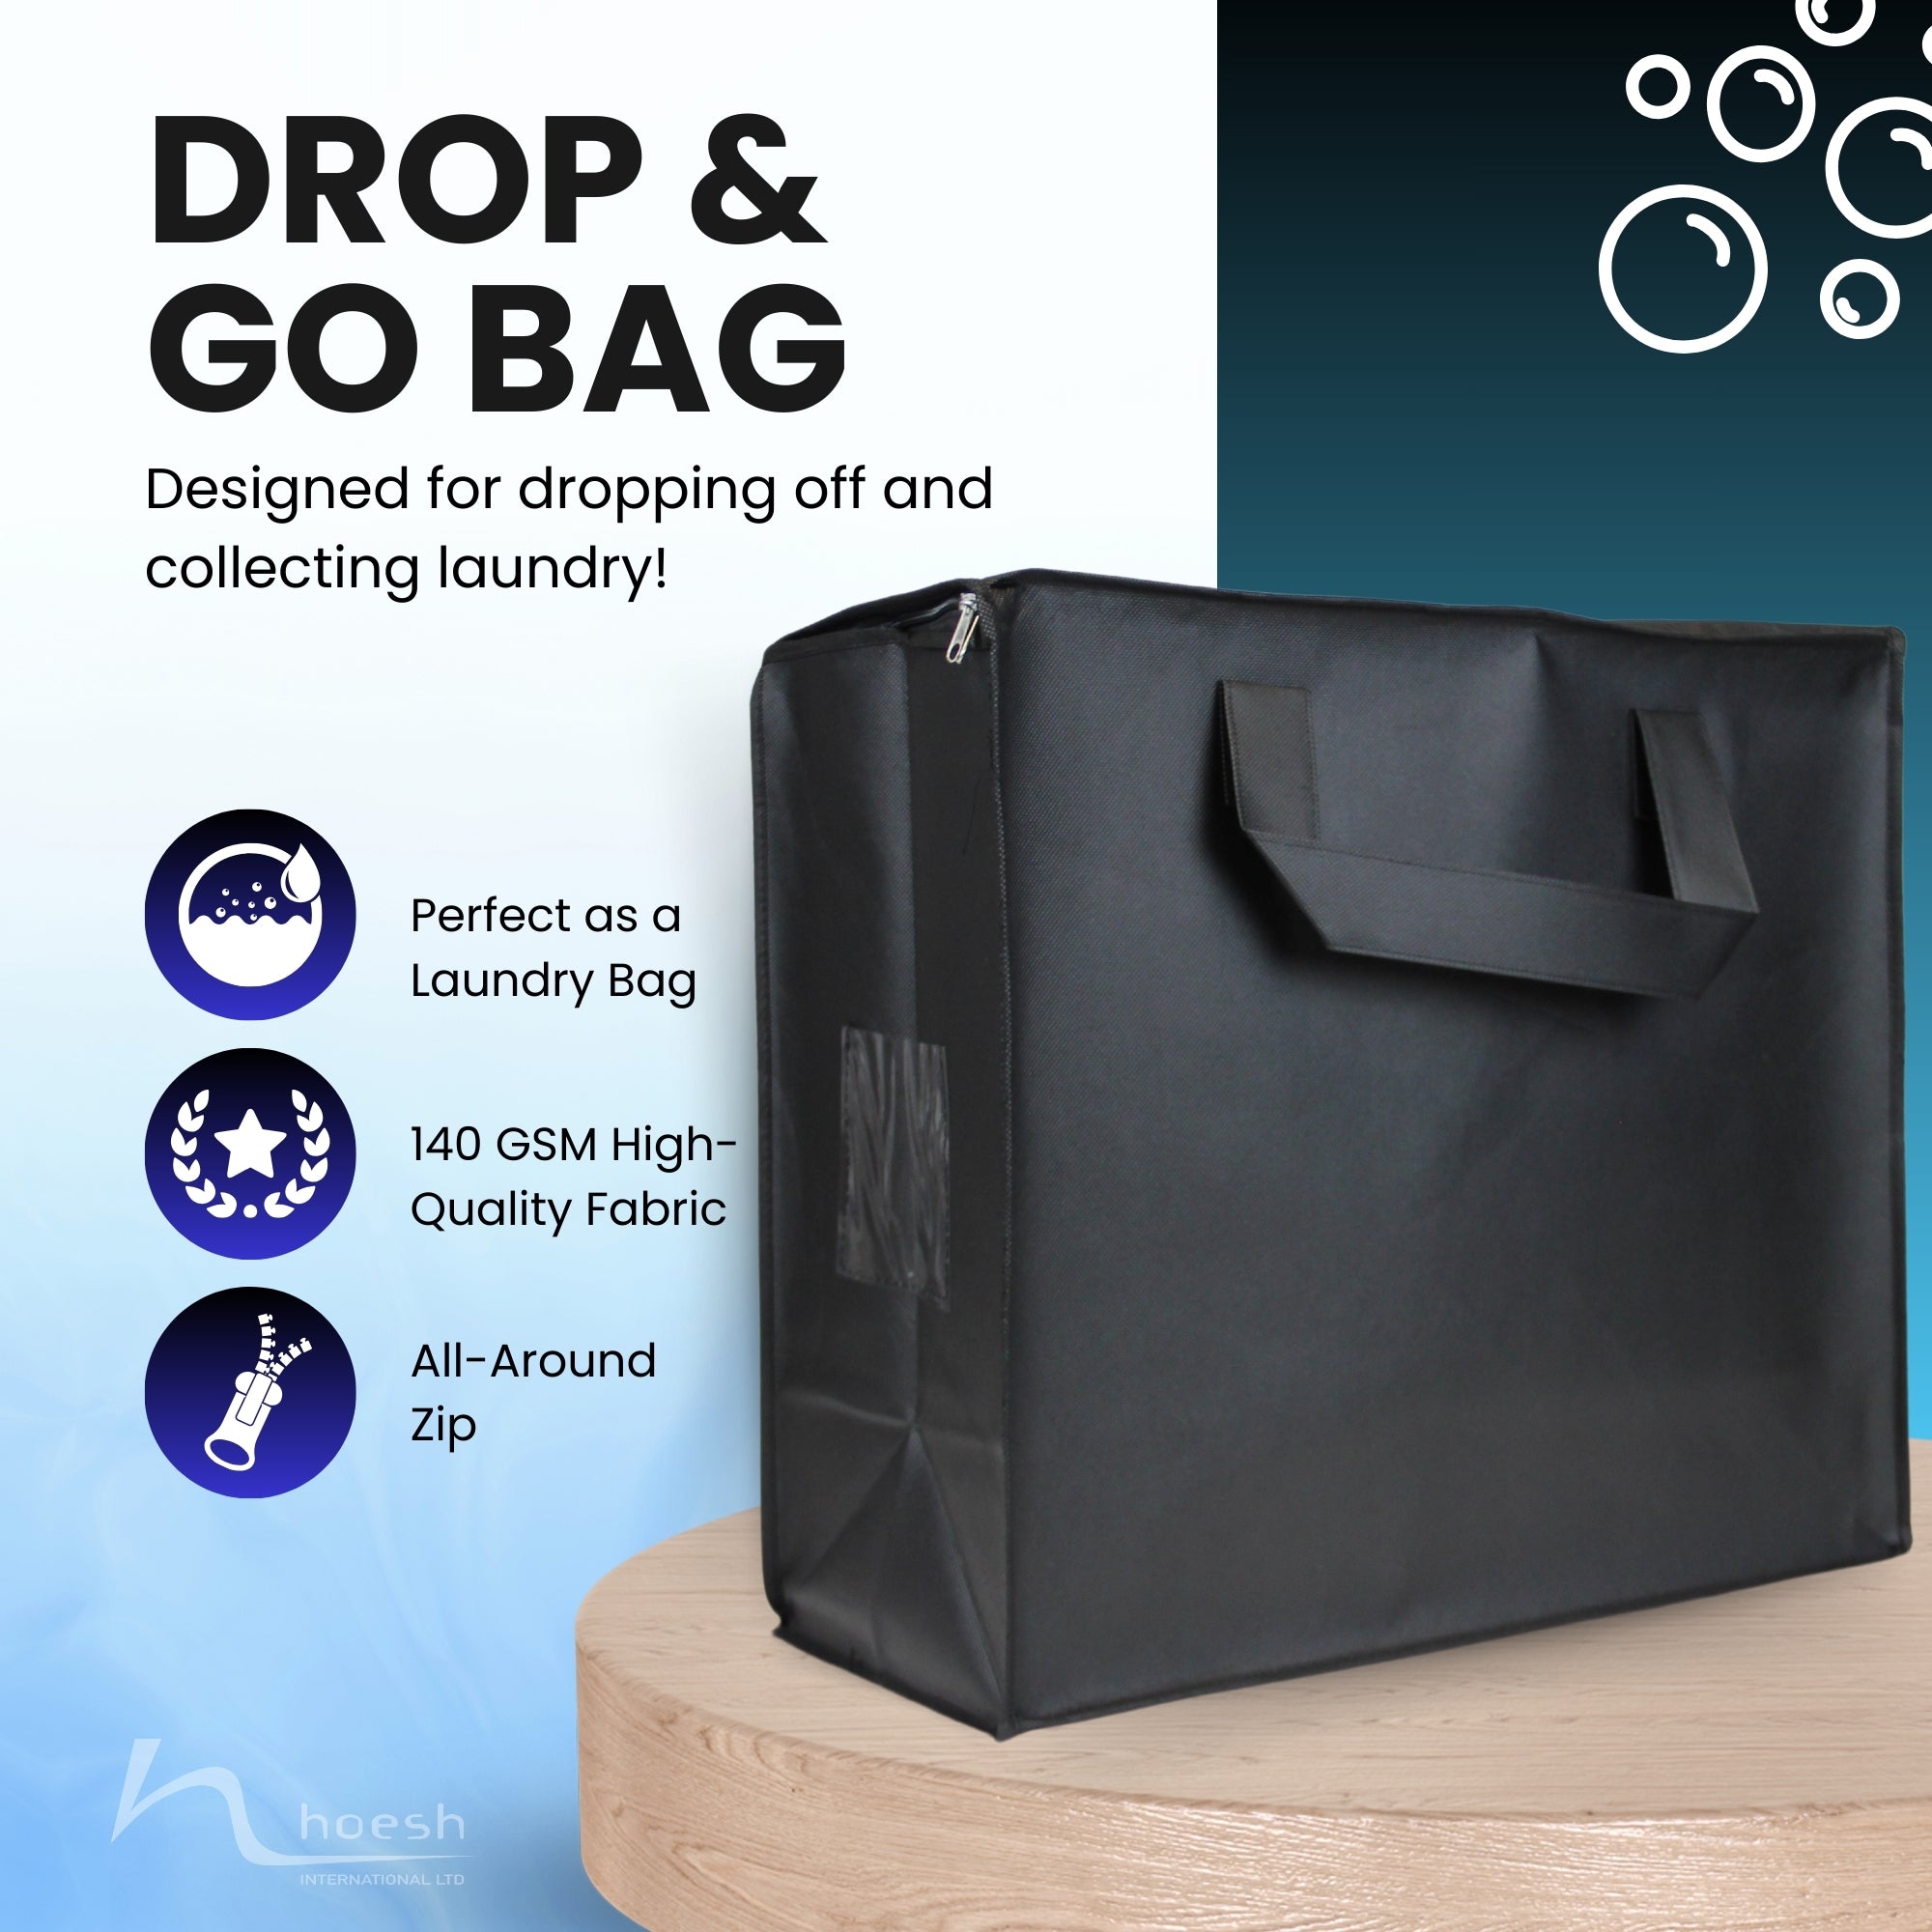 Drop & Go Laundry Bags